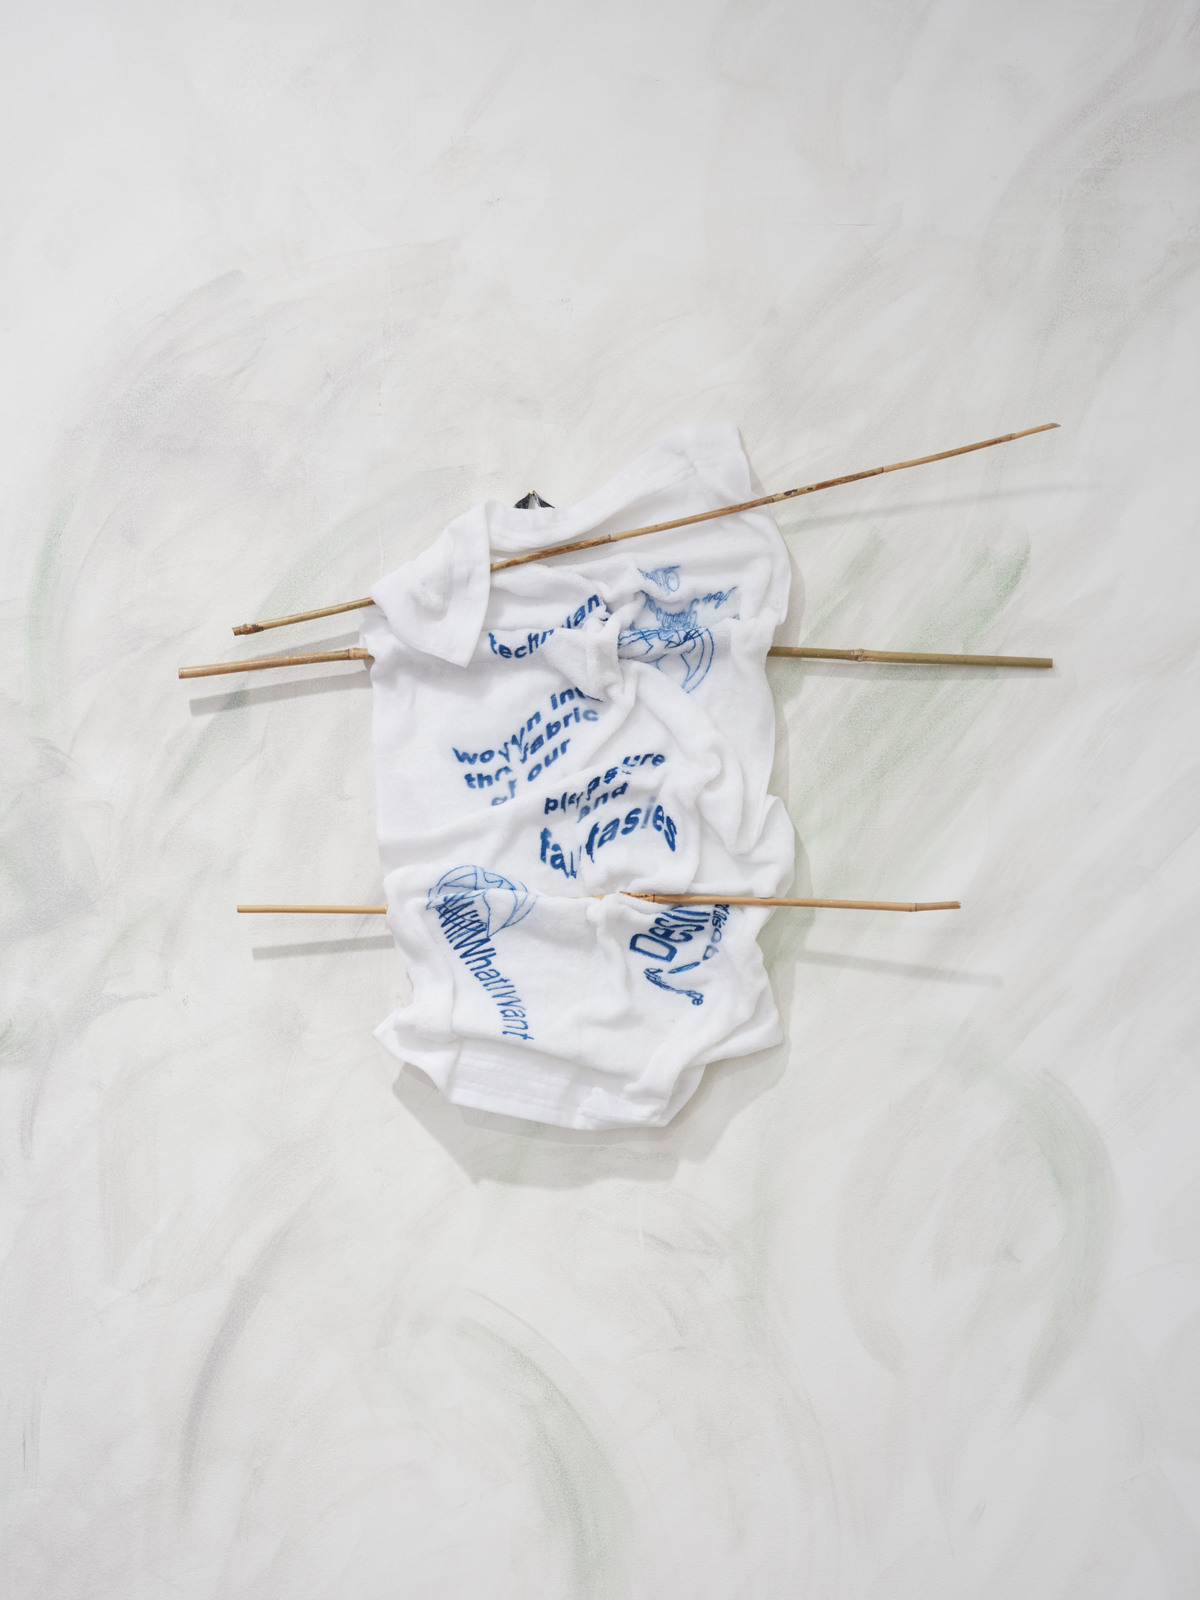 Egle Kulbokaite and Dorota Gaweda, For a Future X (II), 2016, Embroidery, towel, paraffin wax, bamboo sticks, 28 x 35 in, 71 x 90 cm